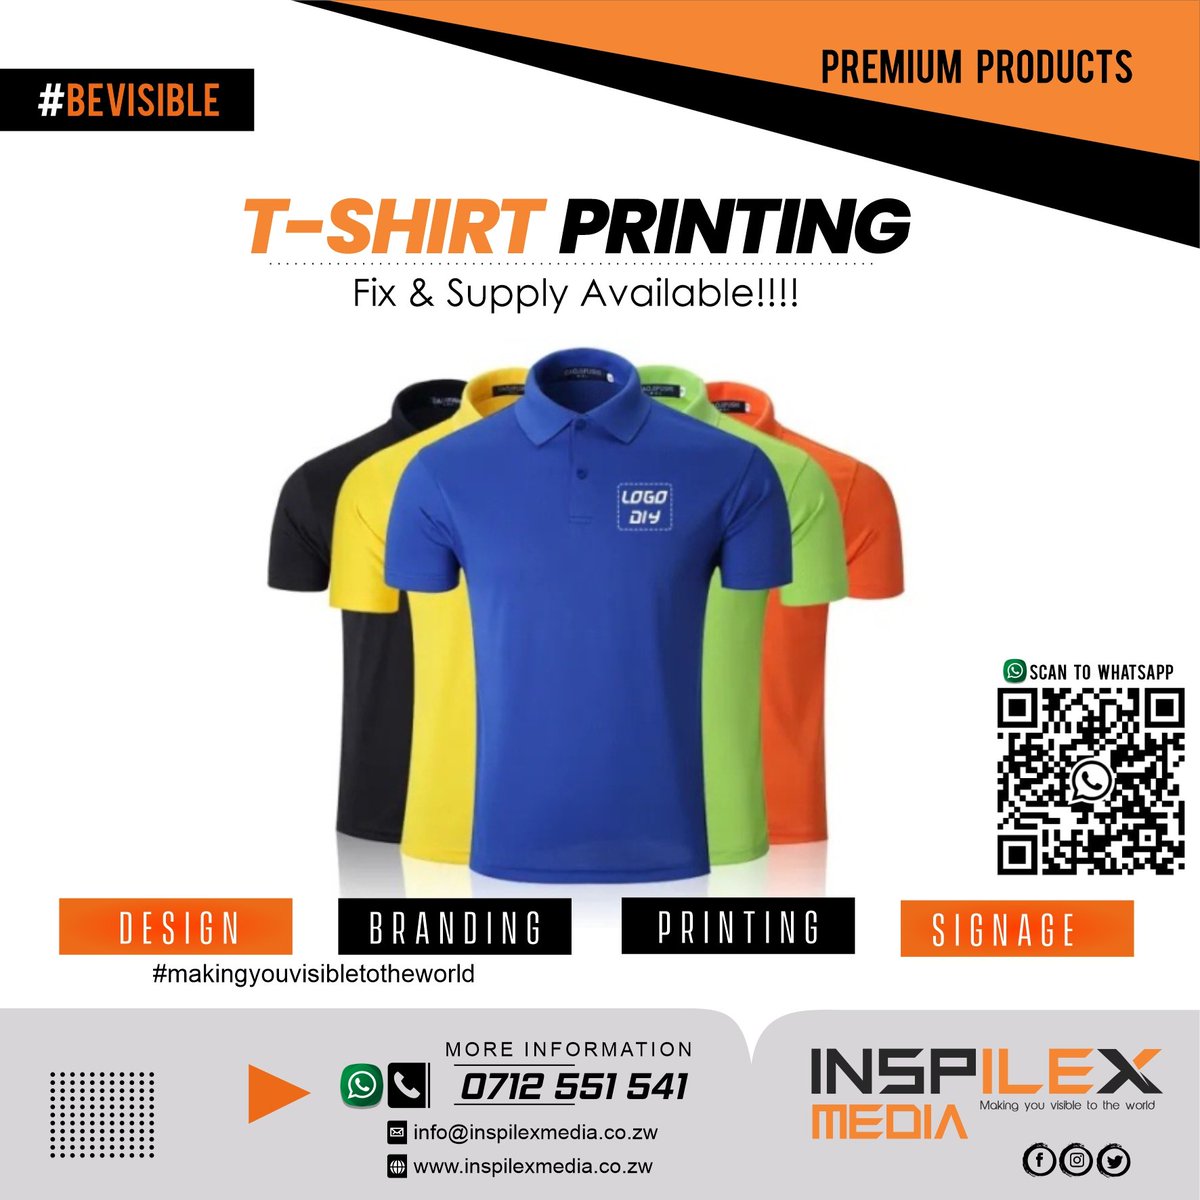 T-shirt Printing
Call/App 0712551541
#inspilexmedia #makingyouvisibletotheworld #bevisible #beseen